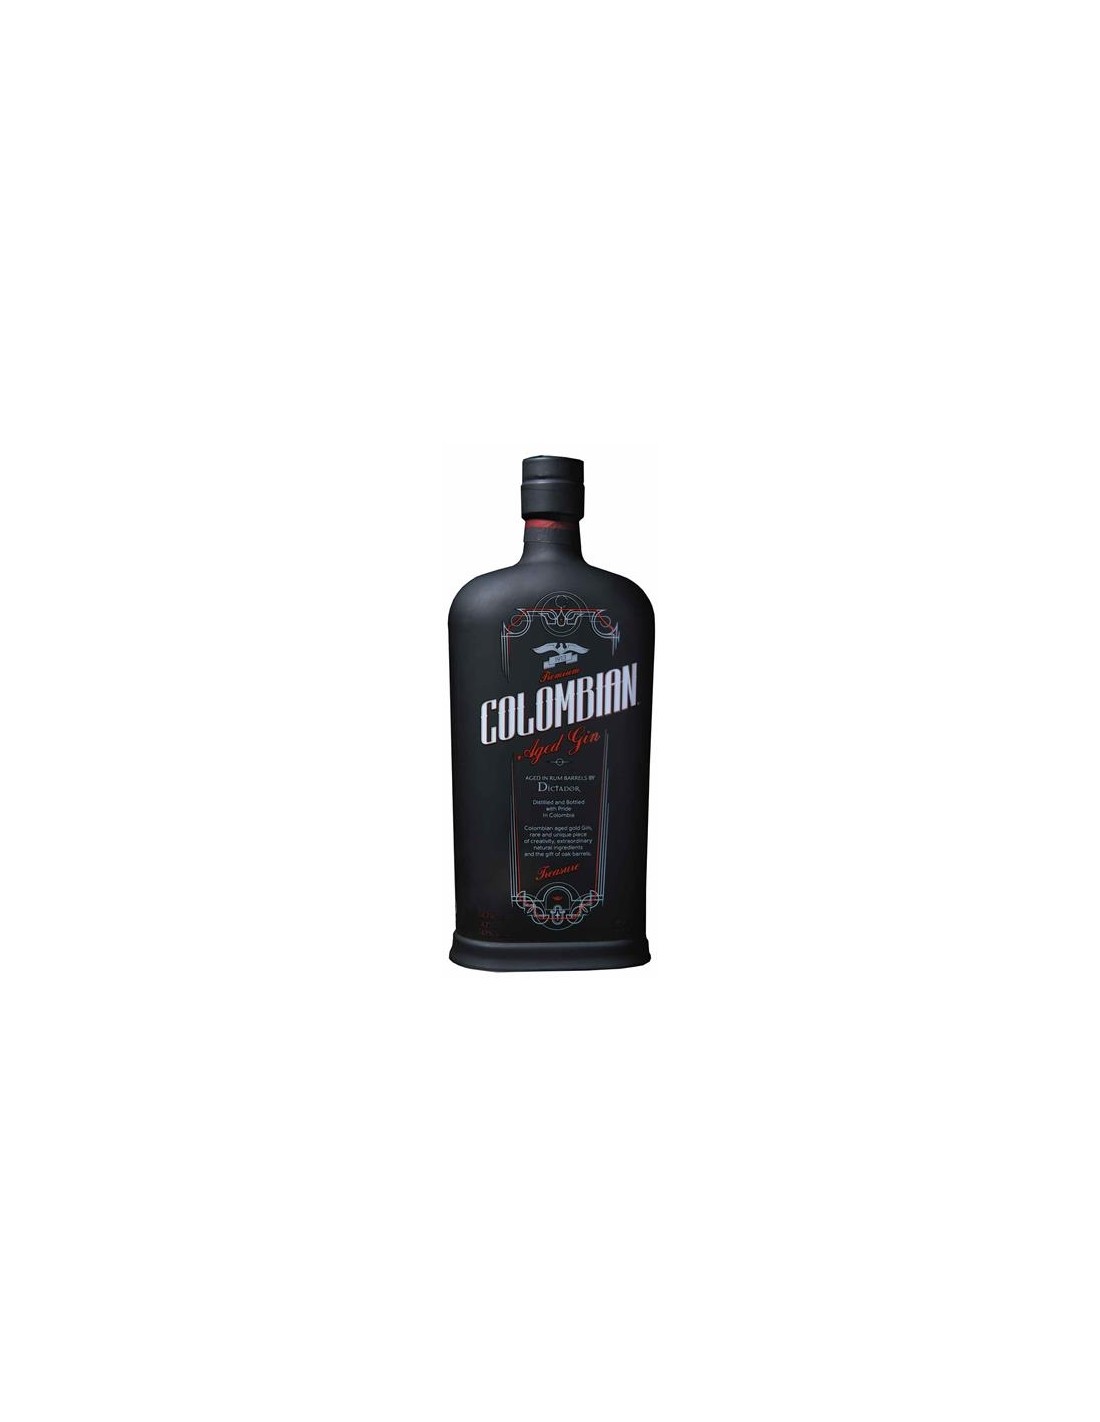 Gin Dictador Colombian Treasure 43% alc., 0.7L, Columbia alcooldiscount.ro